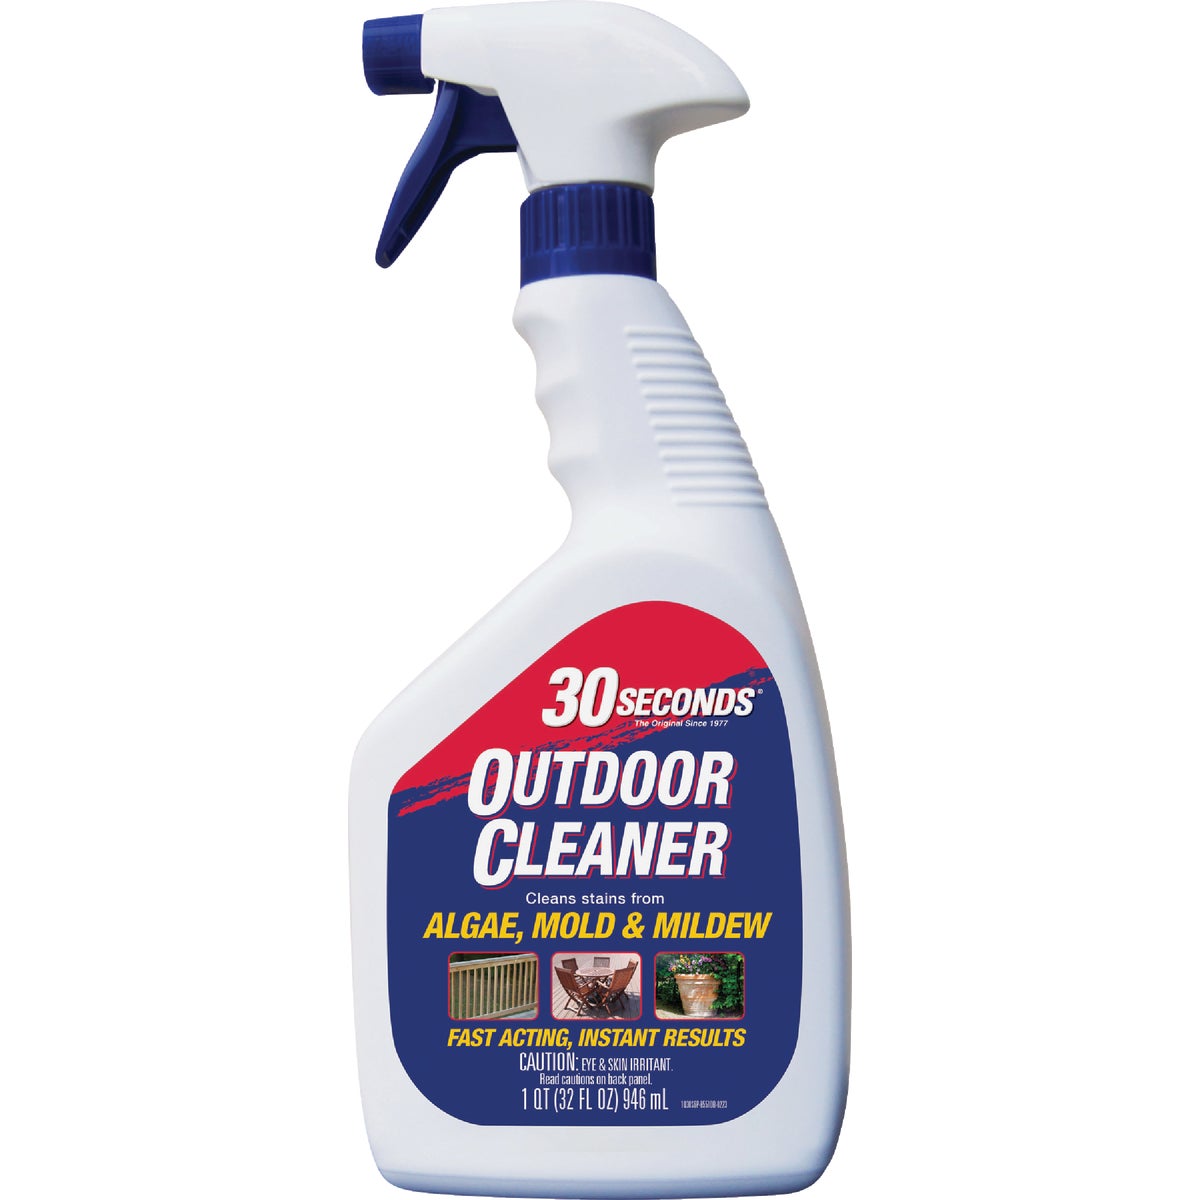 Item 726764, Original 30 seconds outdoor cleaner.